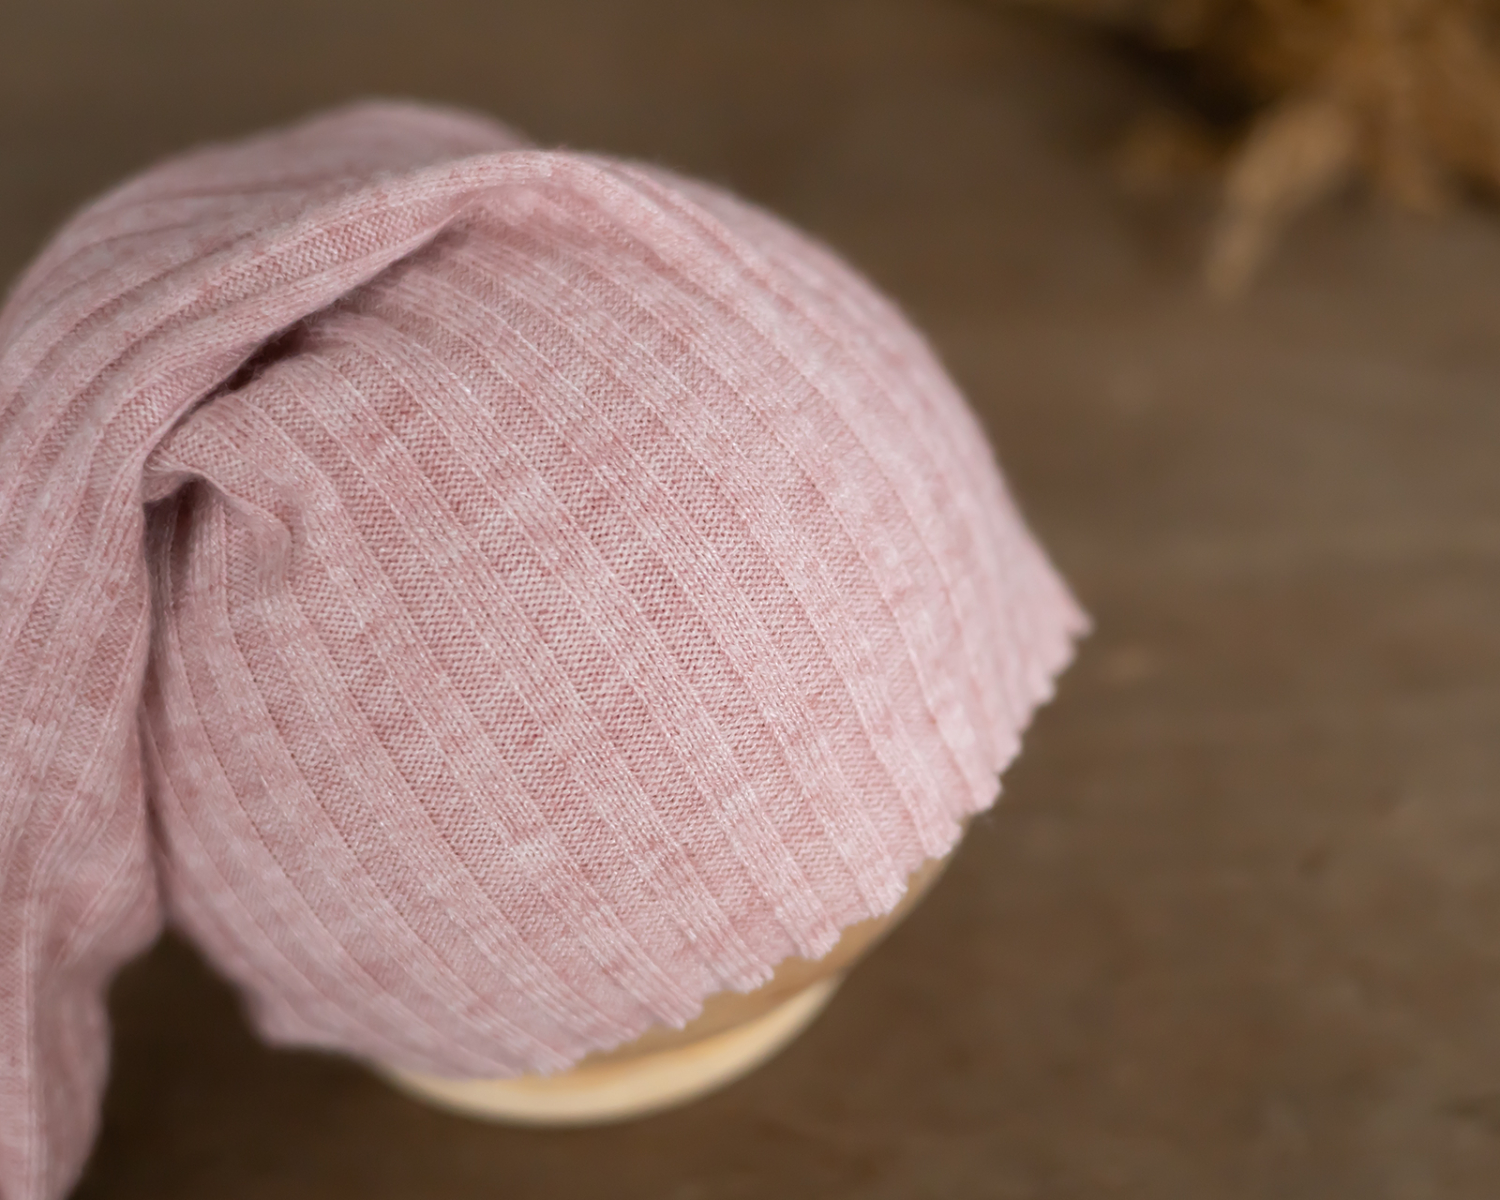 Pink, ribbed newborn sleepy hat